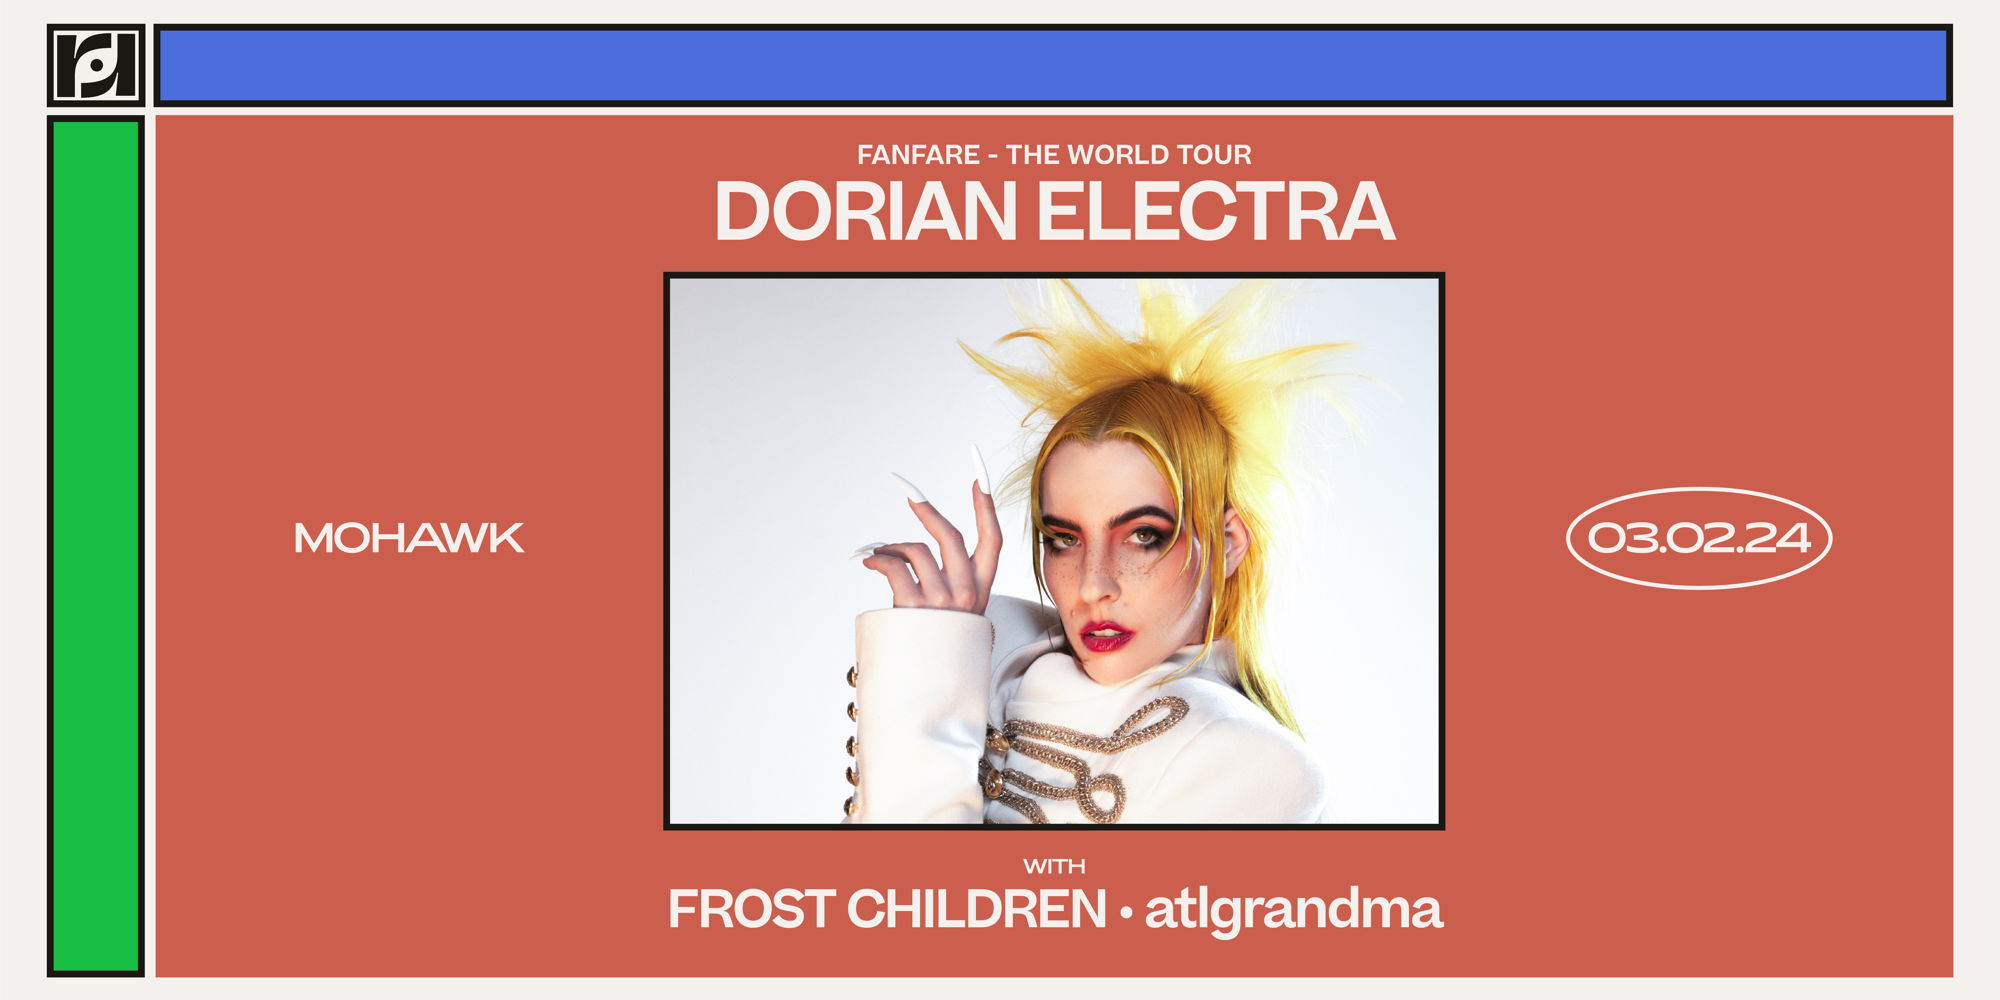 Dorian Electra announces their third studio album Fanfare